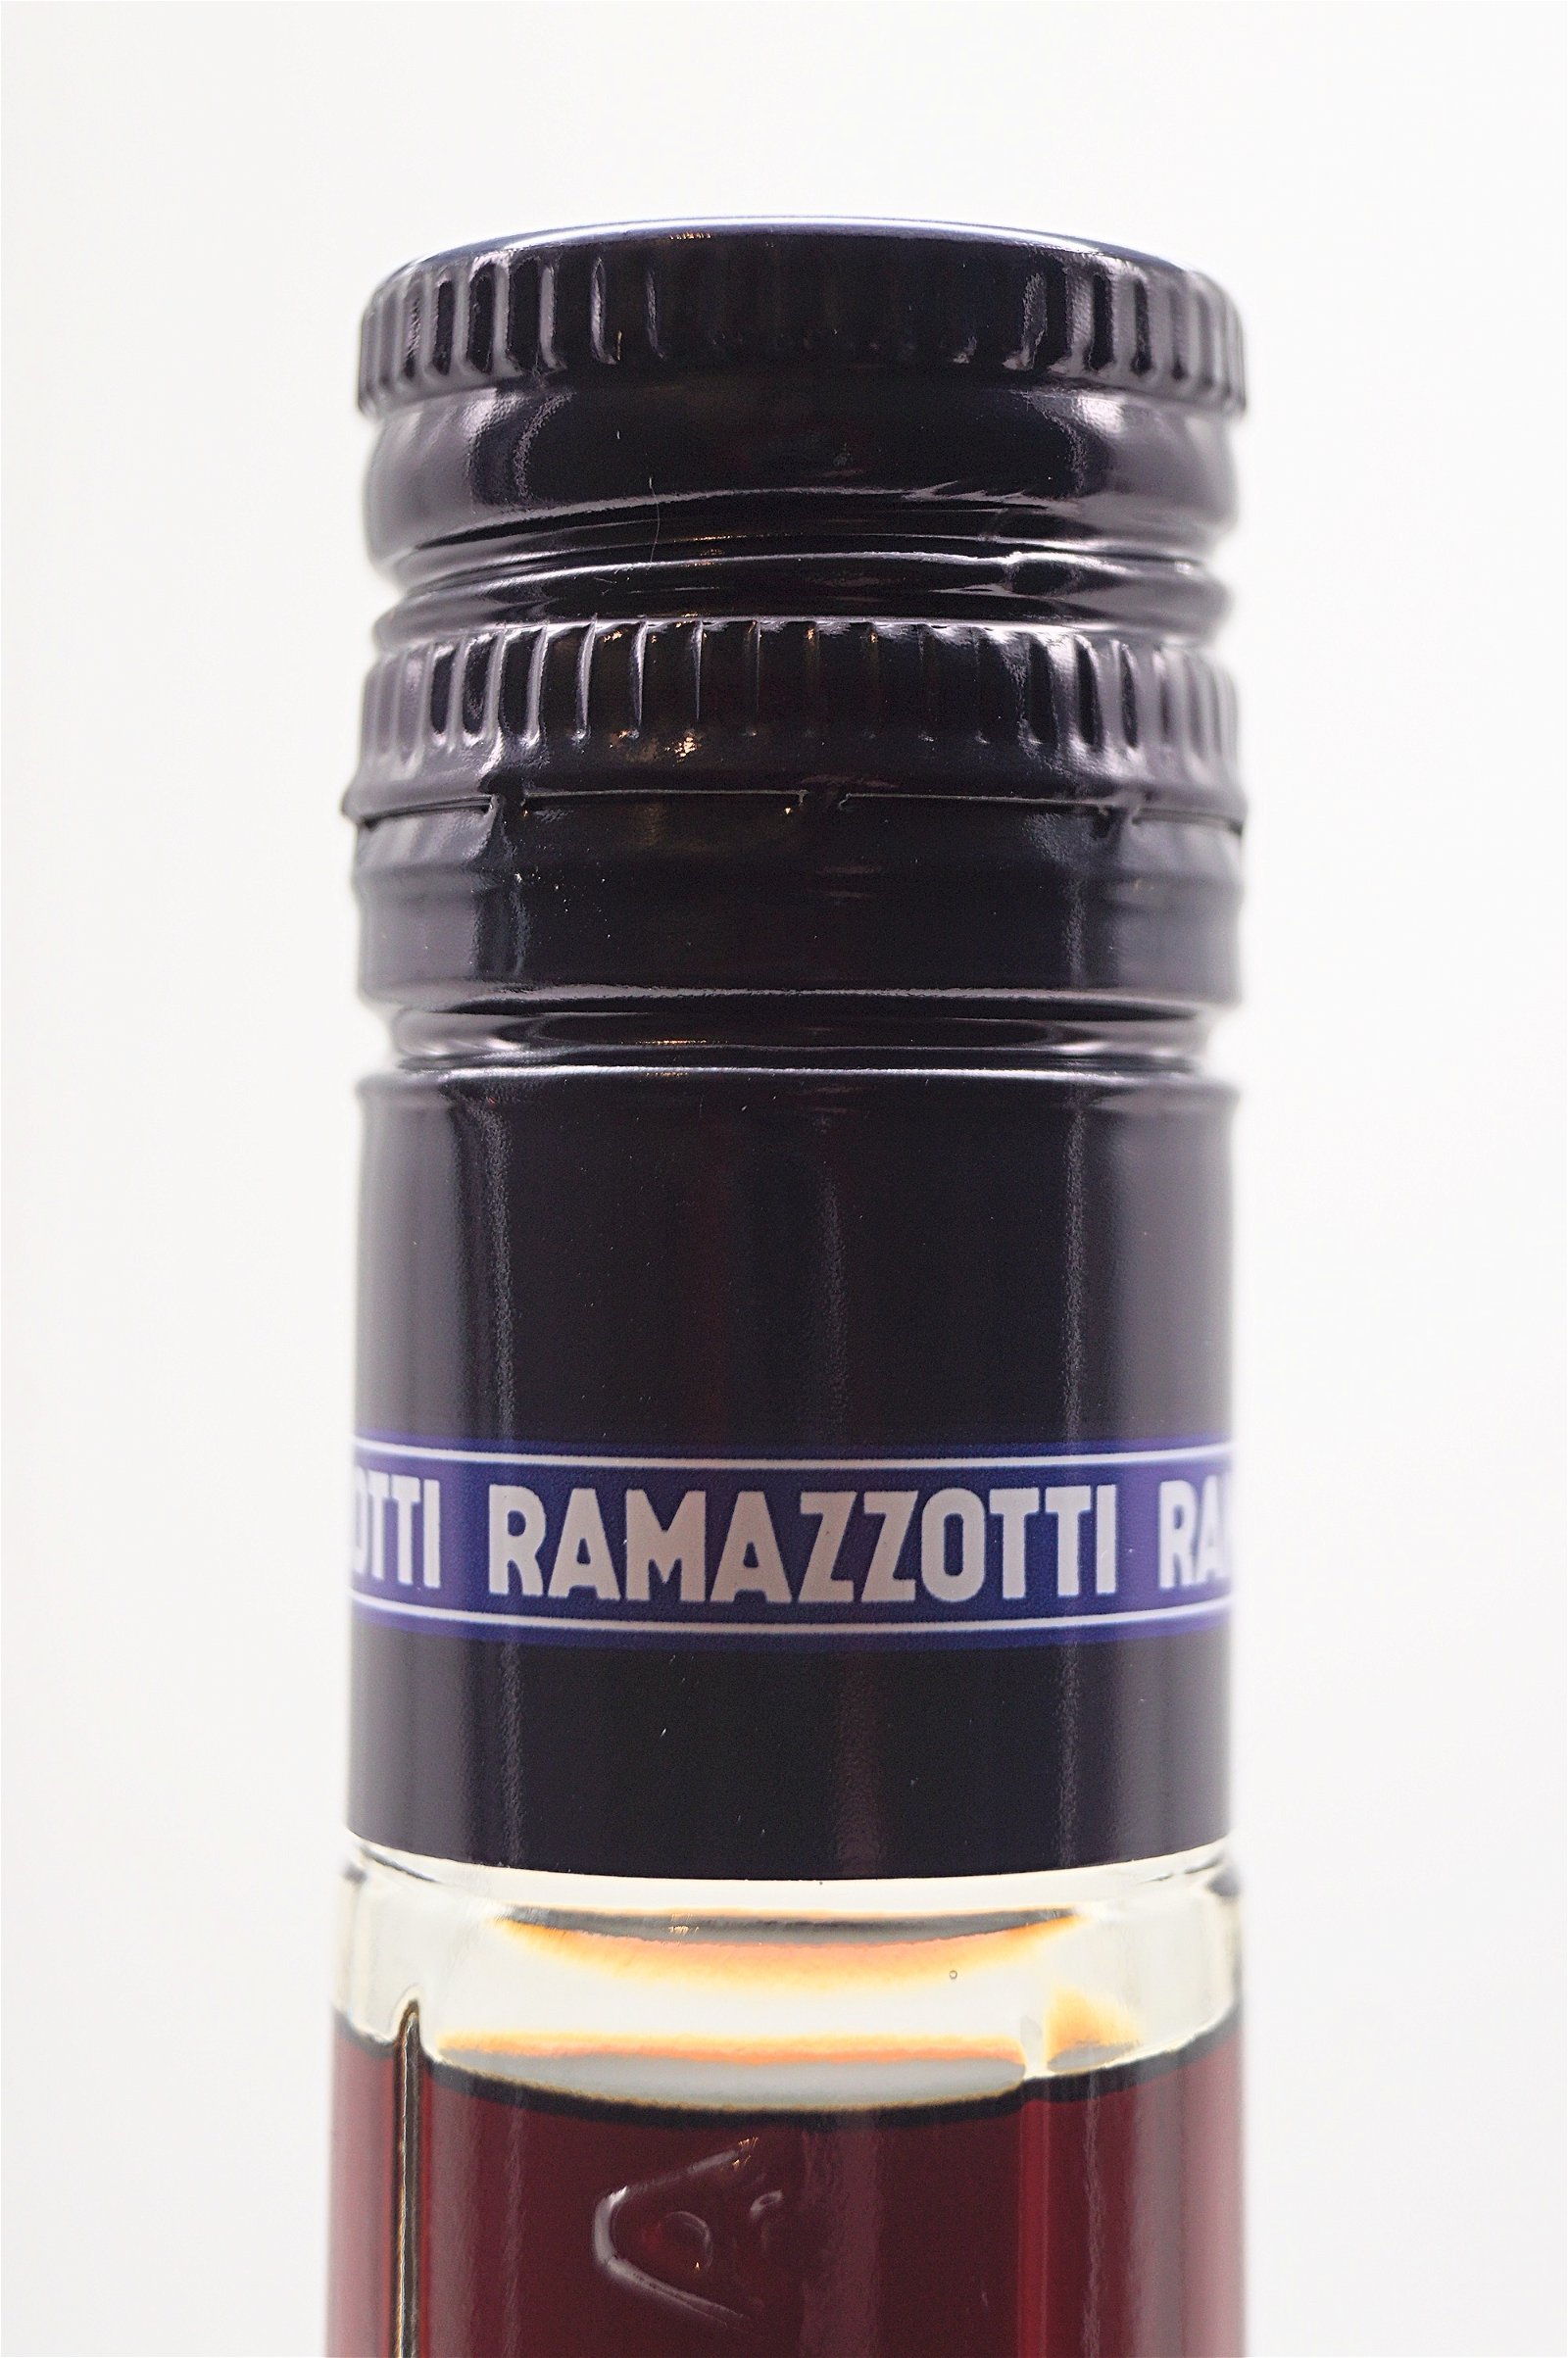 Ramazzotti Amaro Ausano 6x Fl. Sparset 